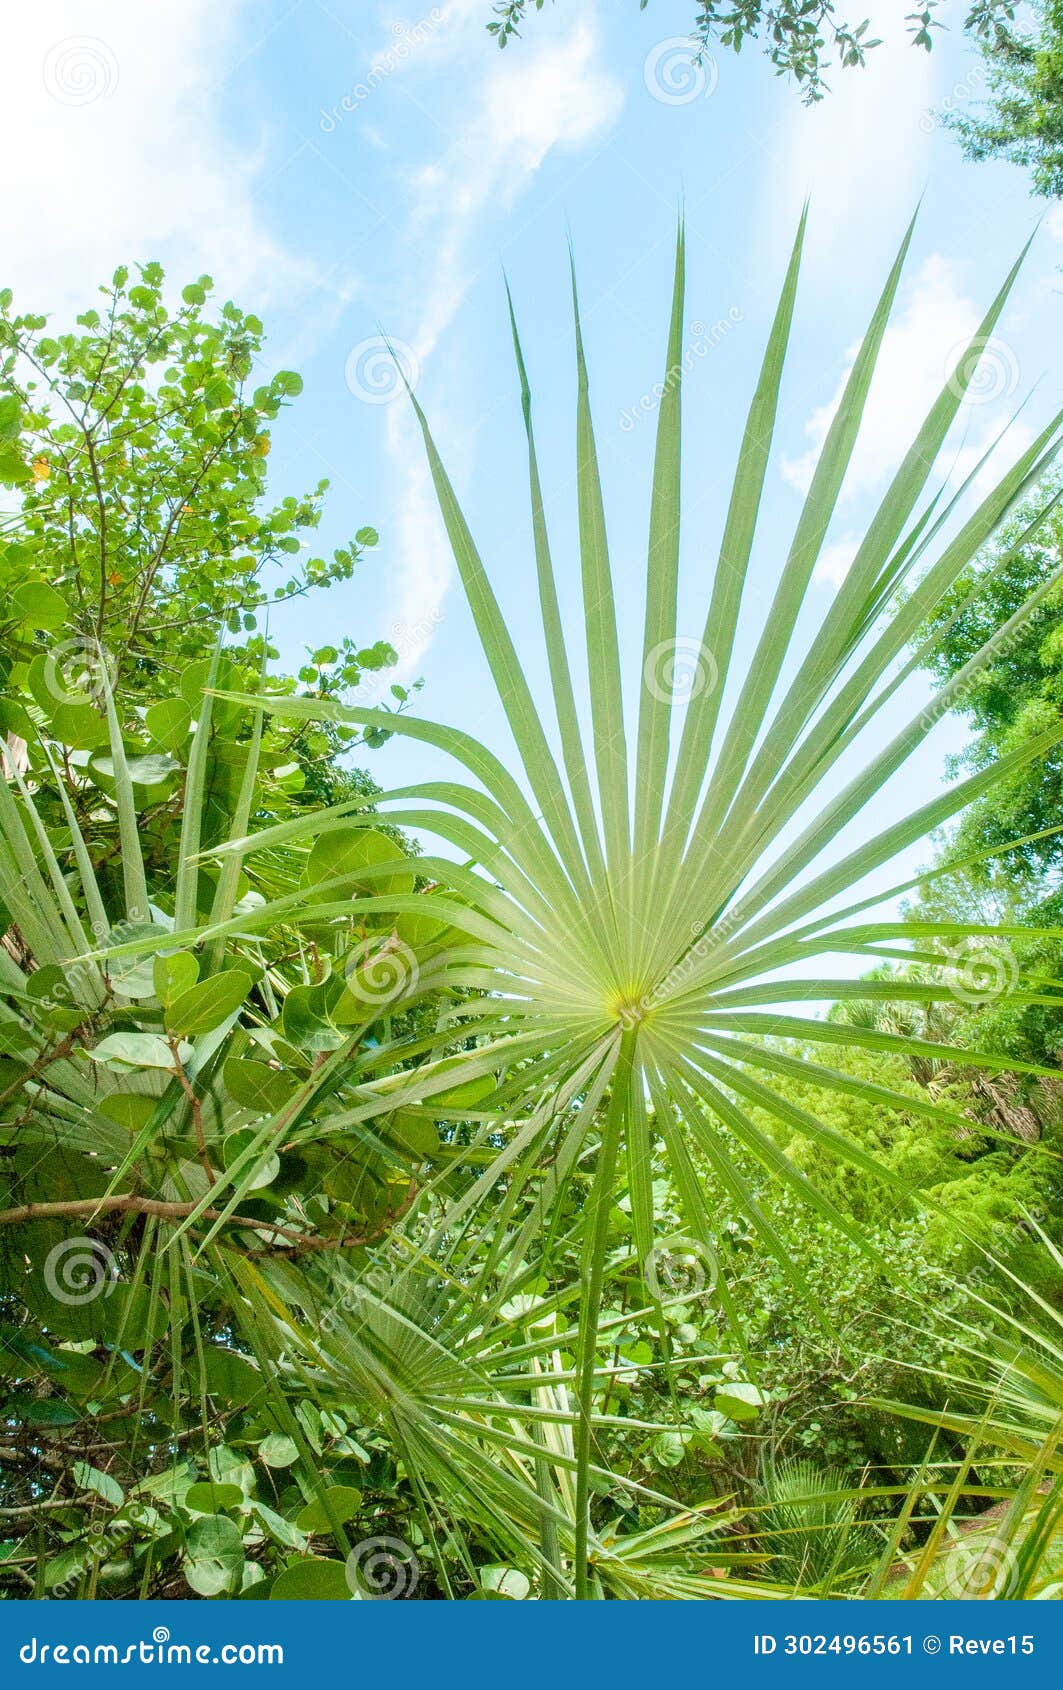 barrigon palm, against blue sky